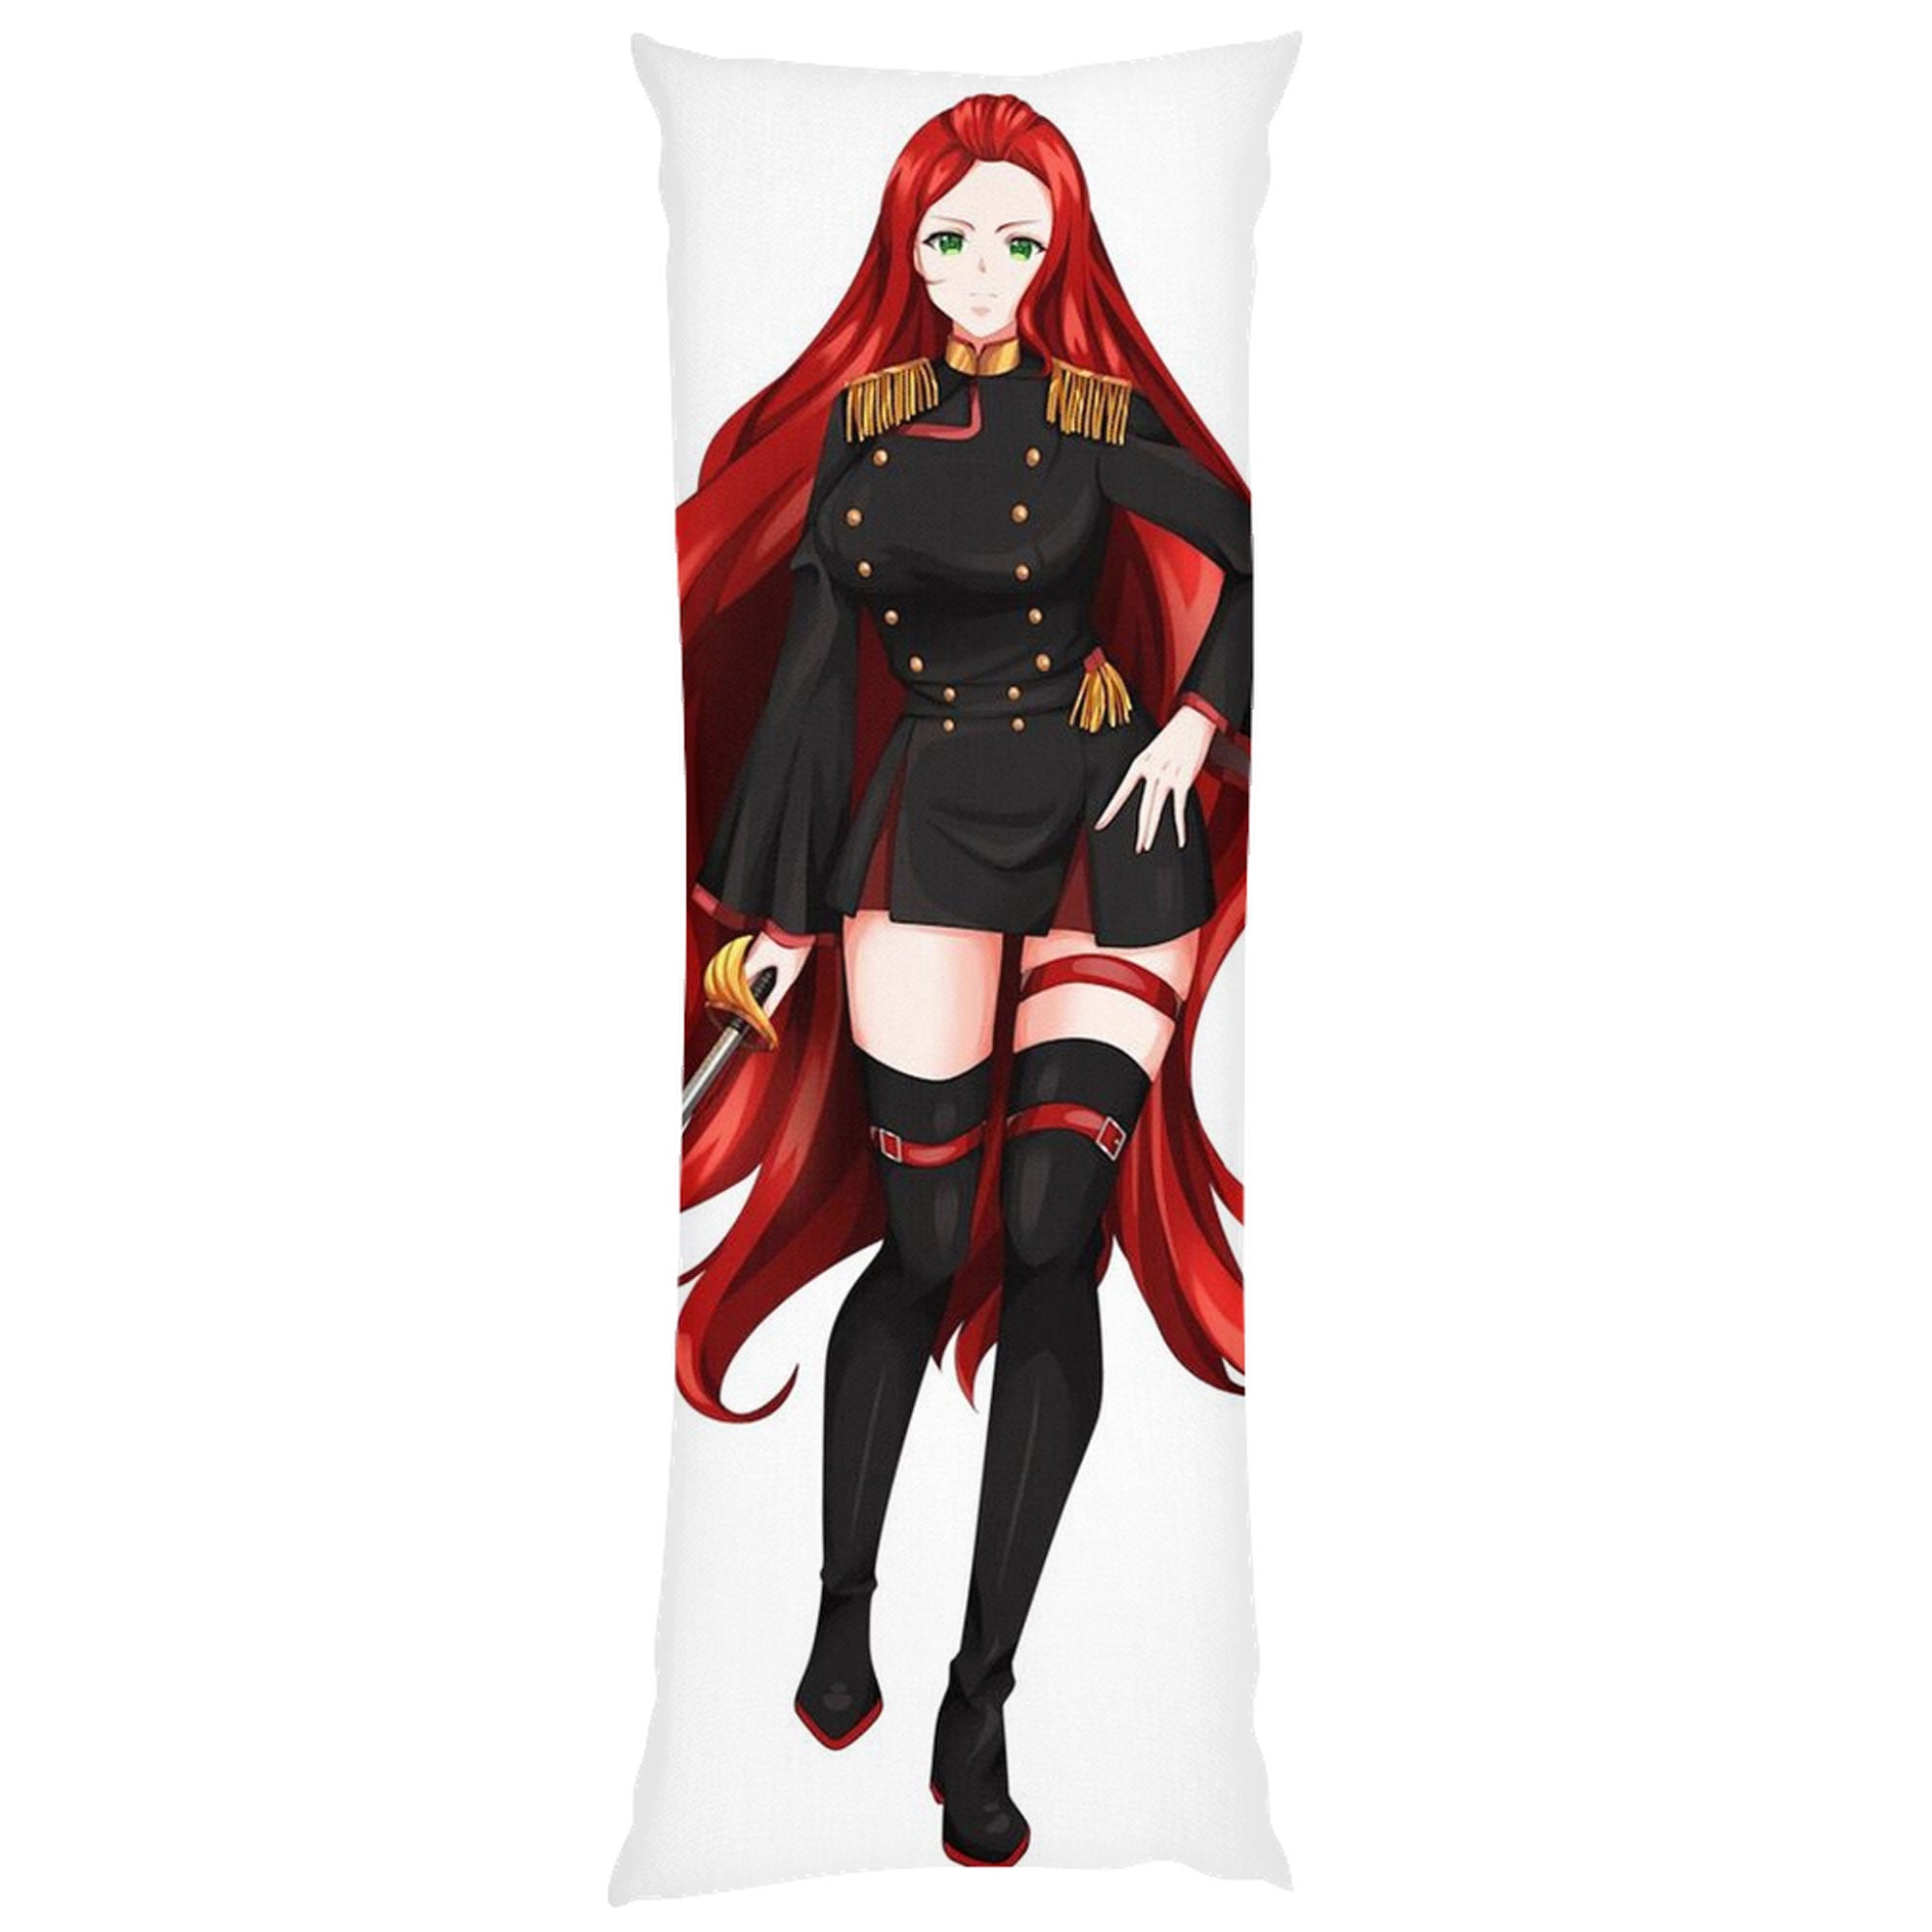 Best Anime Body Pillows - Dakimakura Pillows Review - Yawnder